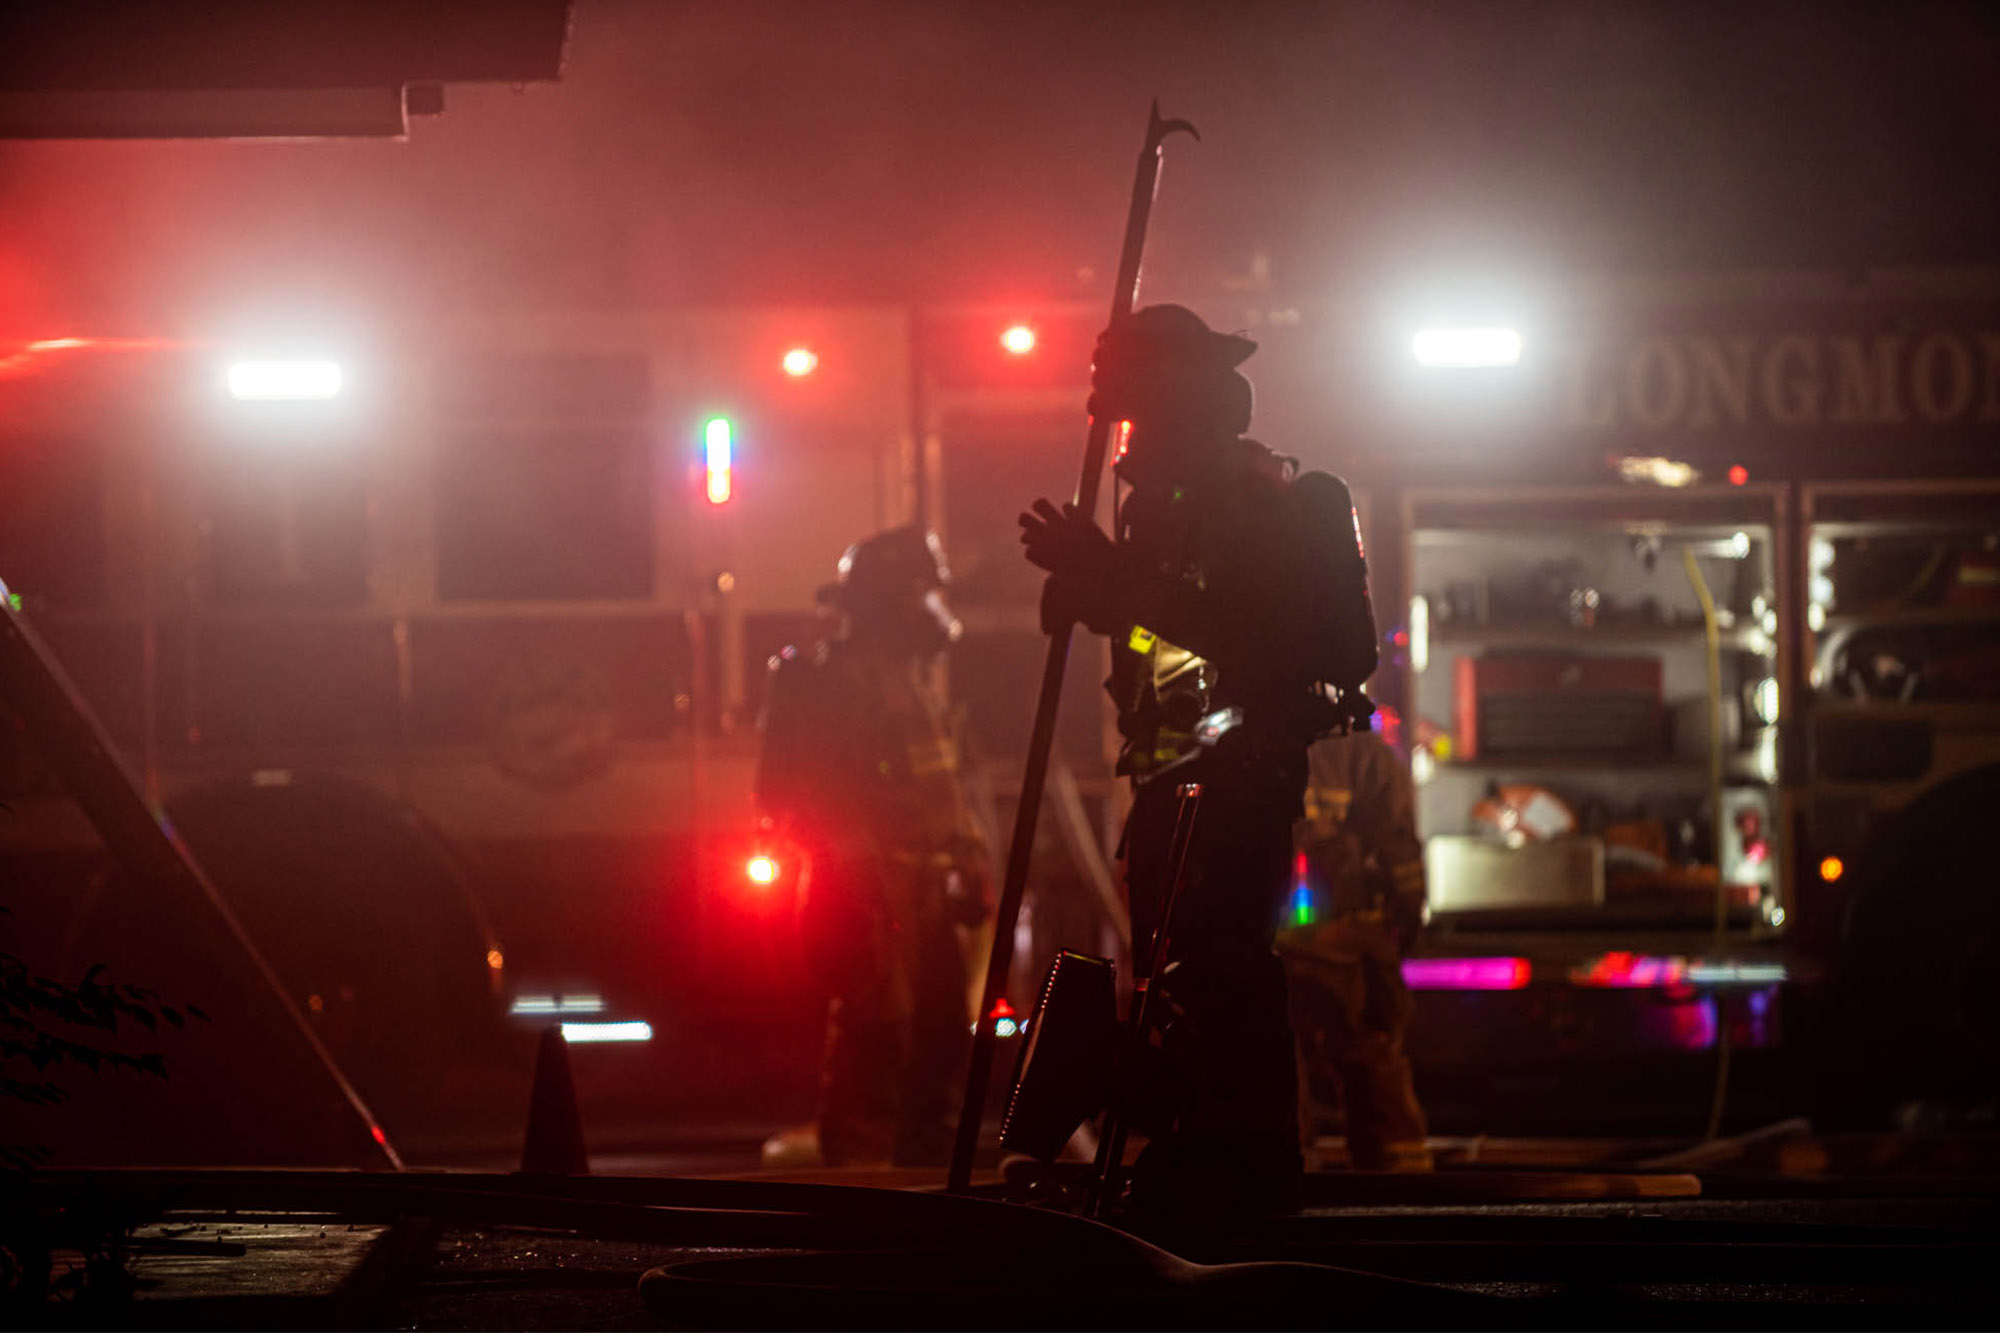 Police investigating fire at Colorado pregnancy center